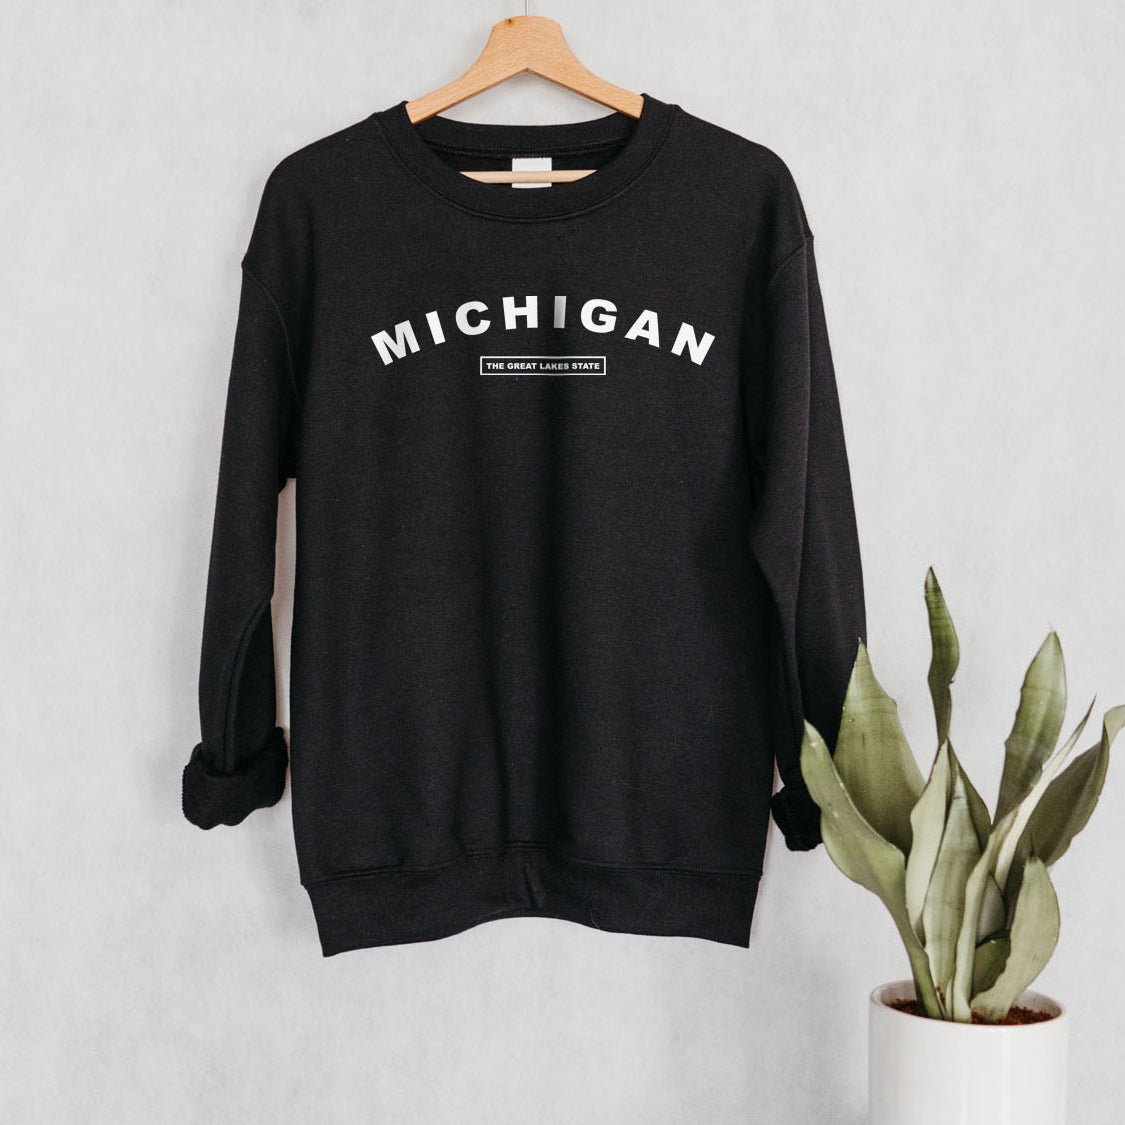 Michigan The Great Lakes State Sweatshirt - United States Name & Slogan Minimal Design Printed Sweatshirt